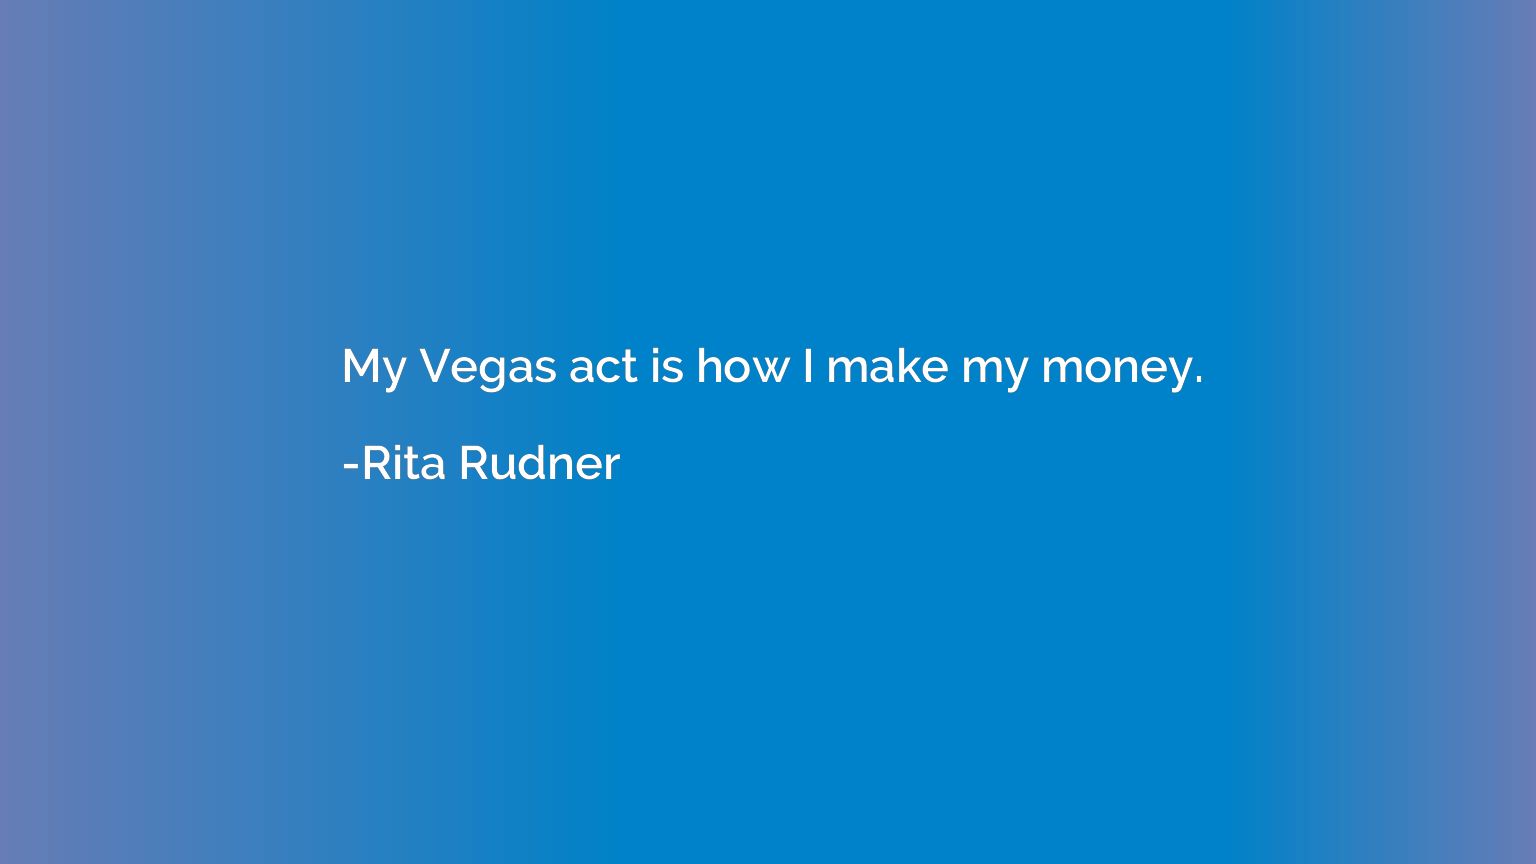 My Vegas act is how I make my money.